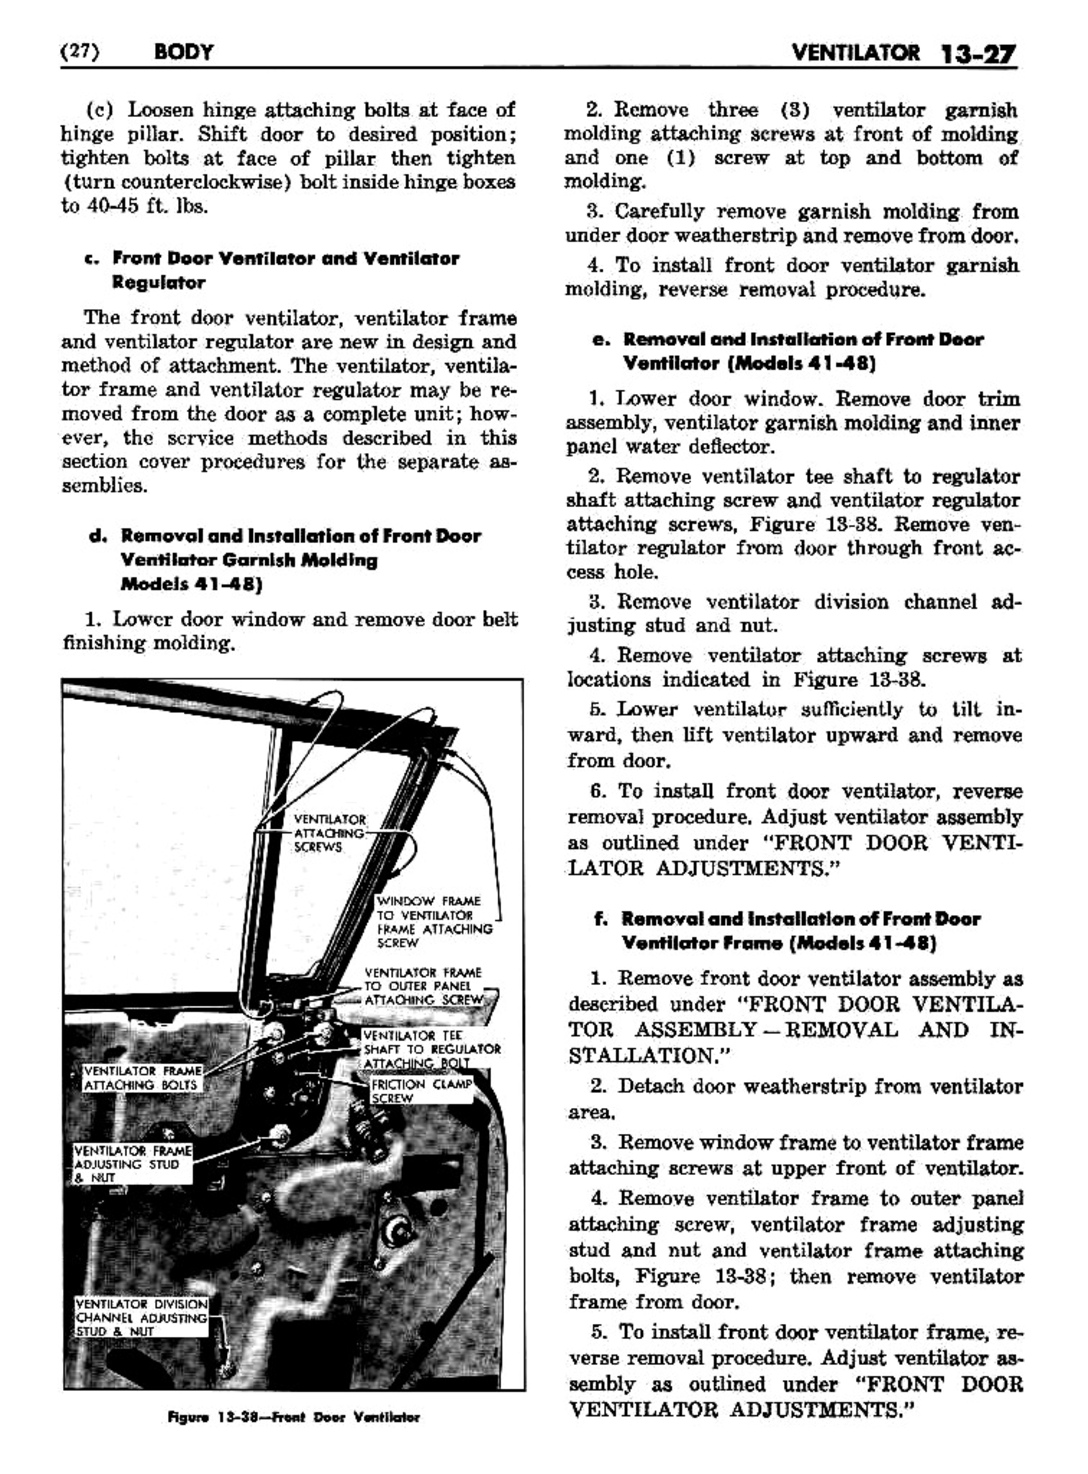 n_1957 Buick Body Service Manual-029-029.jpg